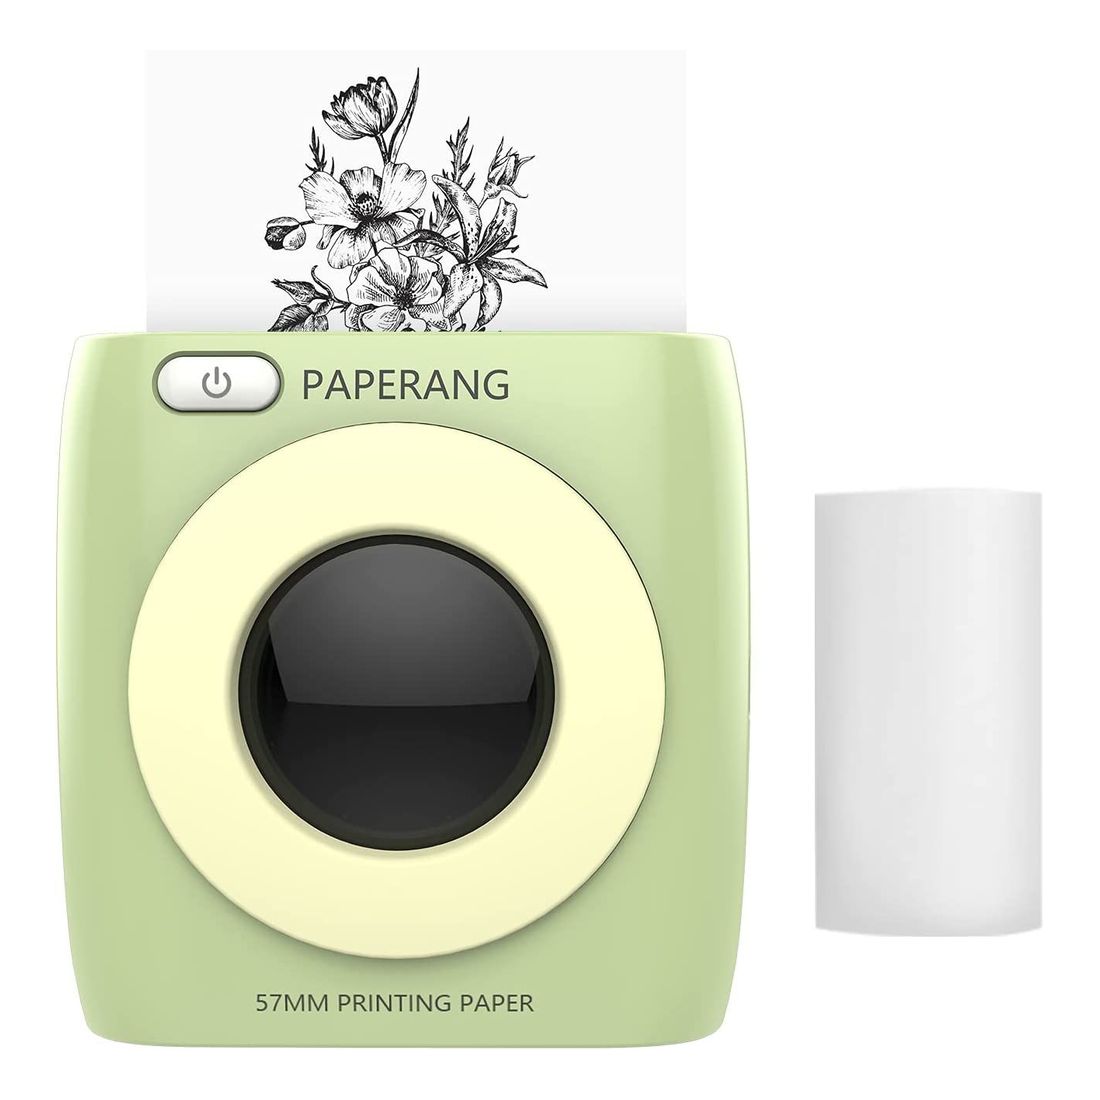 Paperang P2 Pocket Printer (57mm) - Green